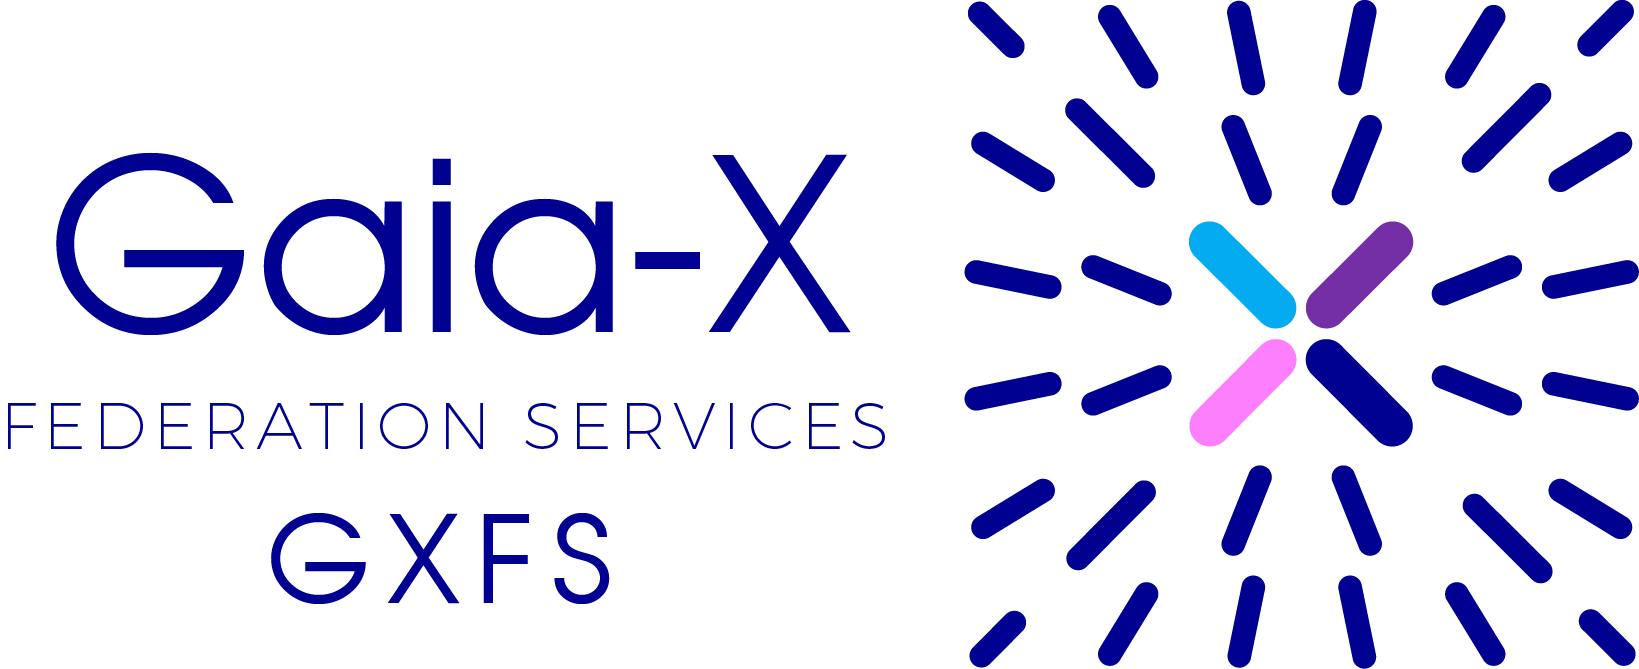 Gaia-X Federation Services